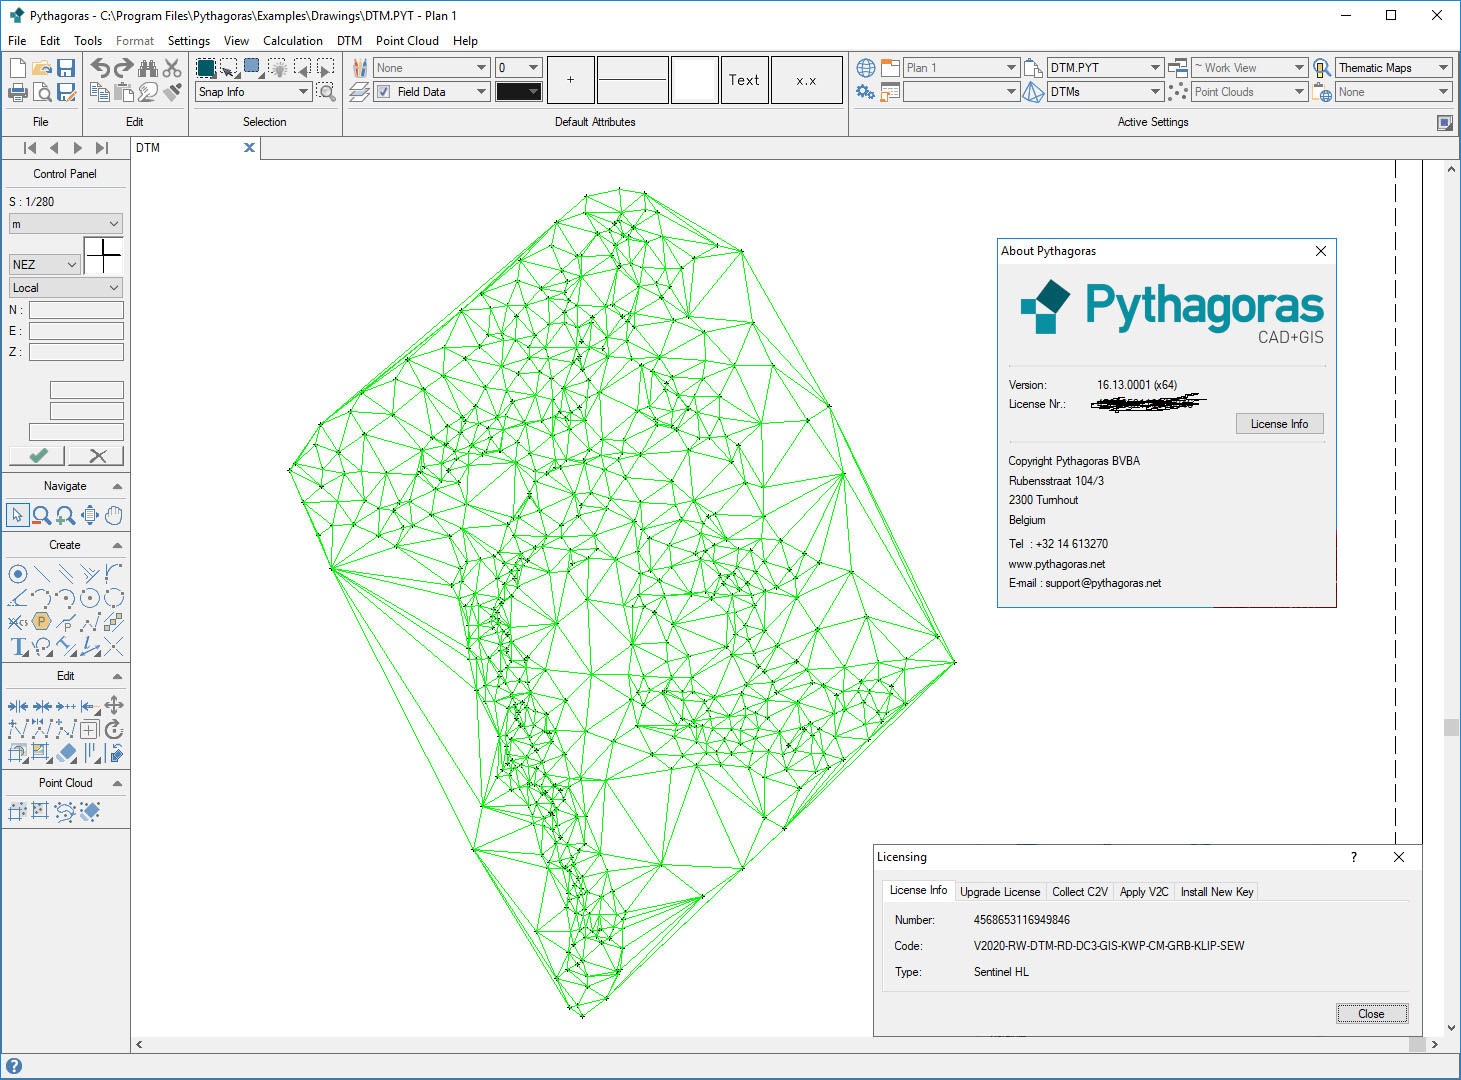 Working with Pythagoras CAD + GIS v16.13.0001 full